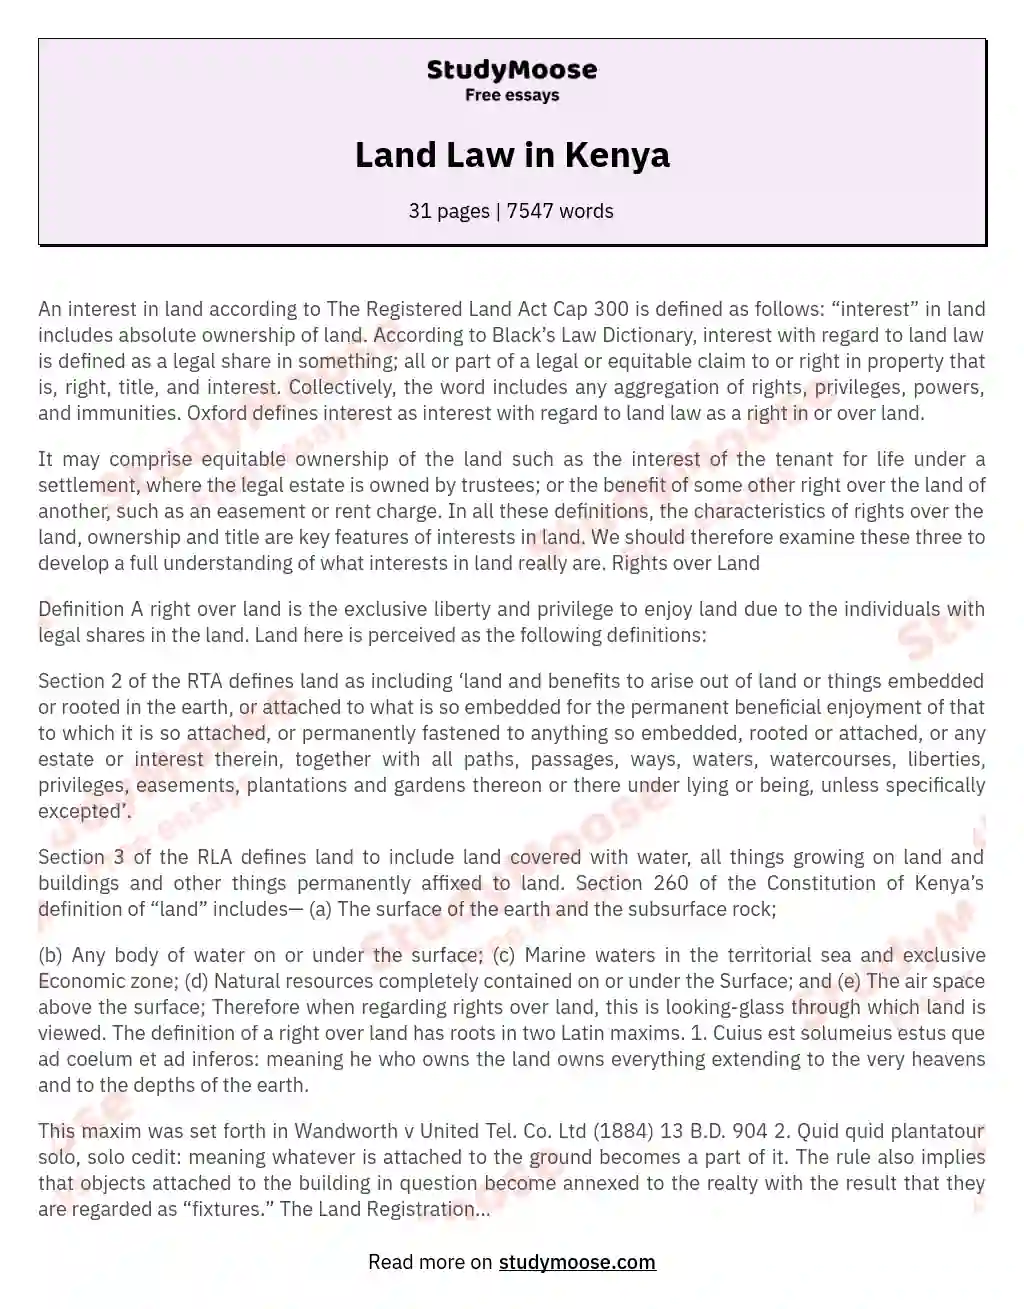 Land Law in Kenya essay